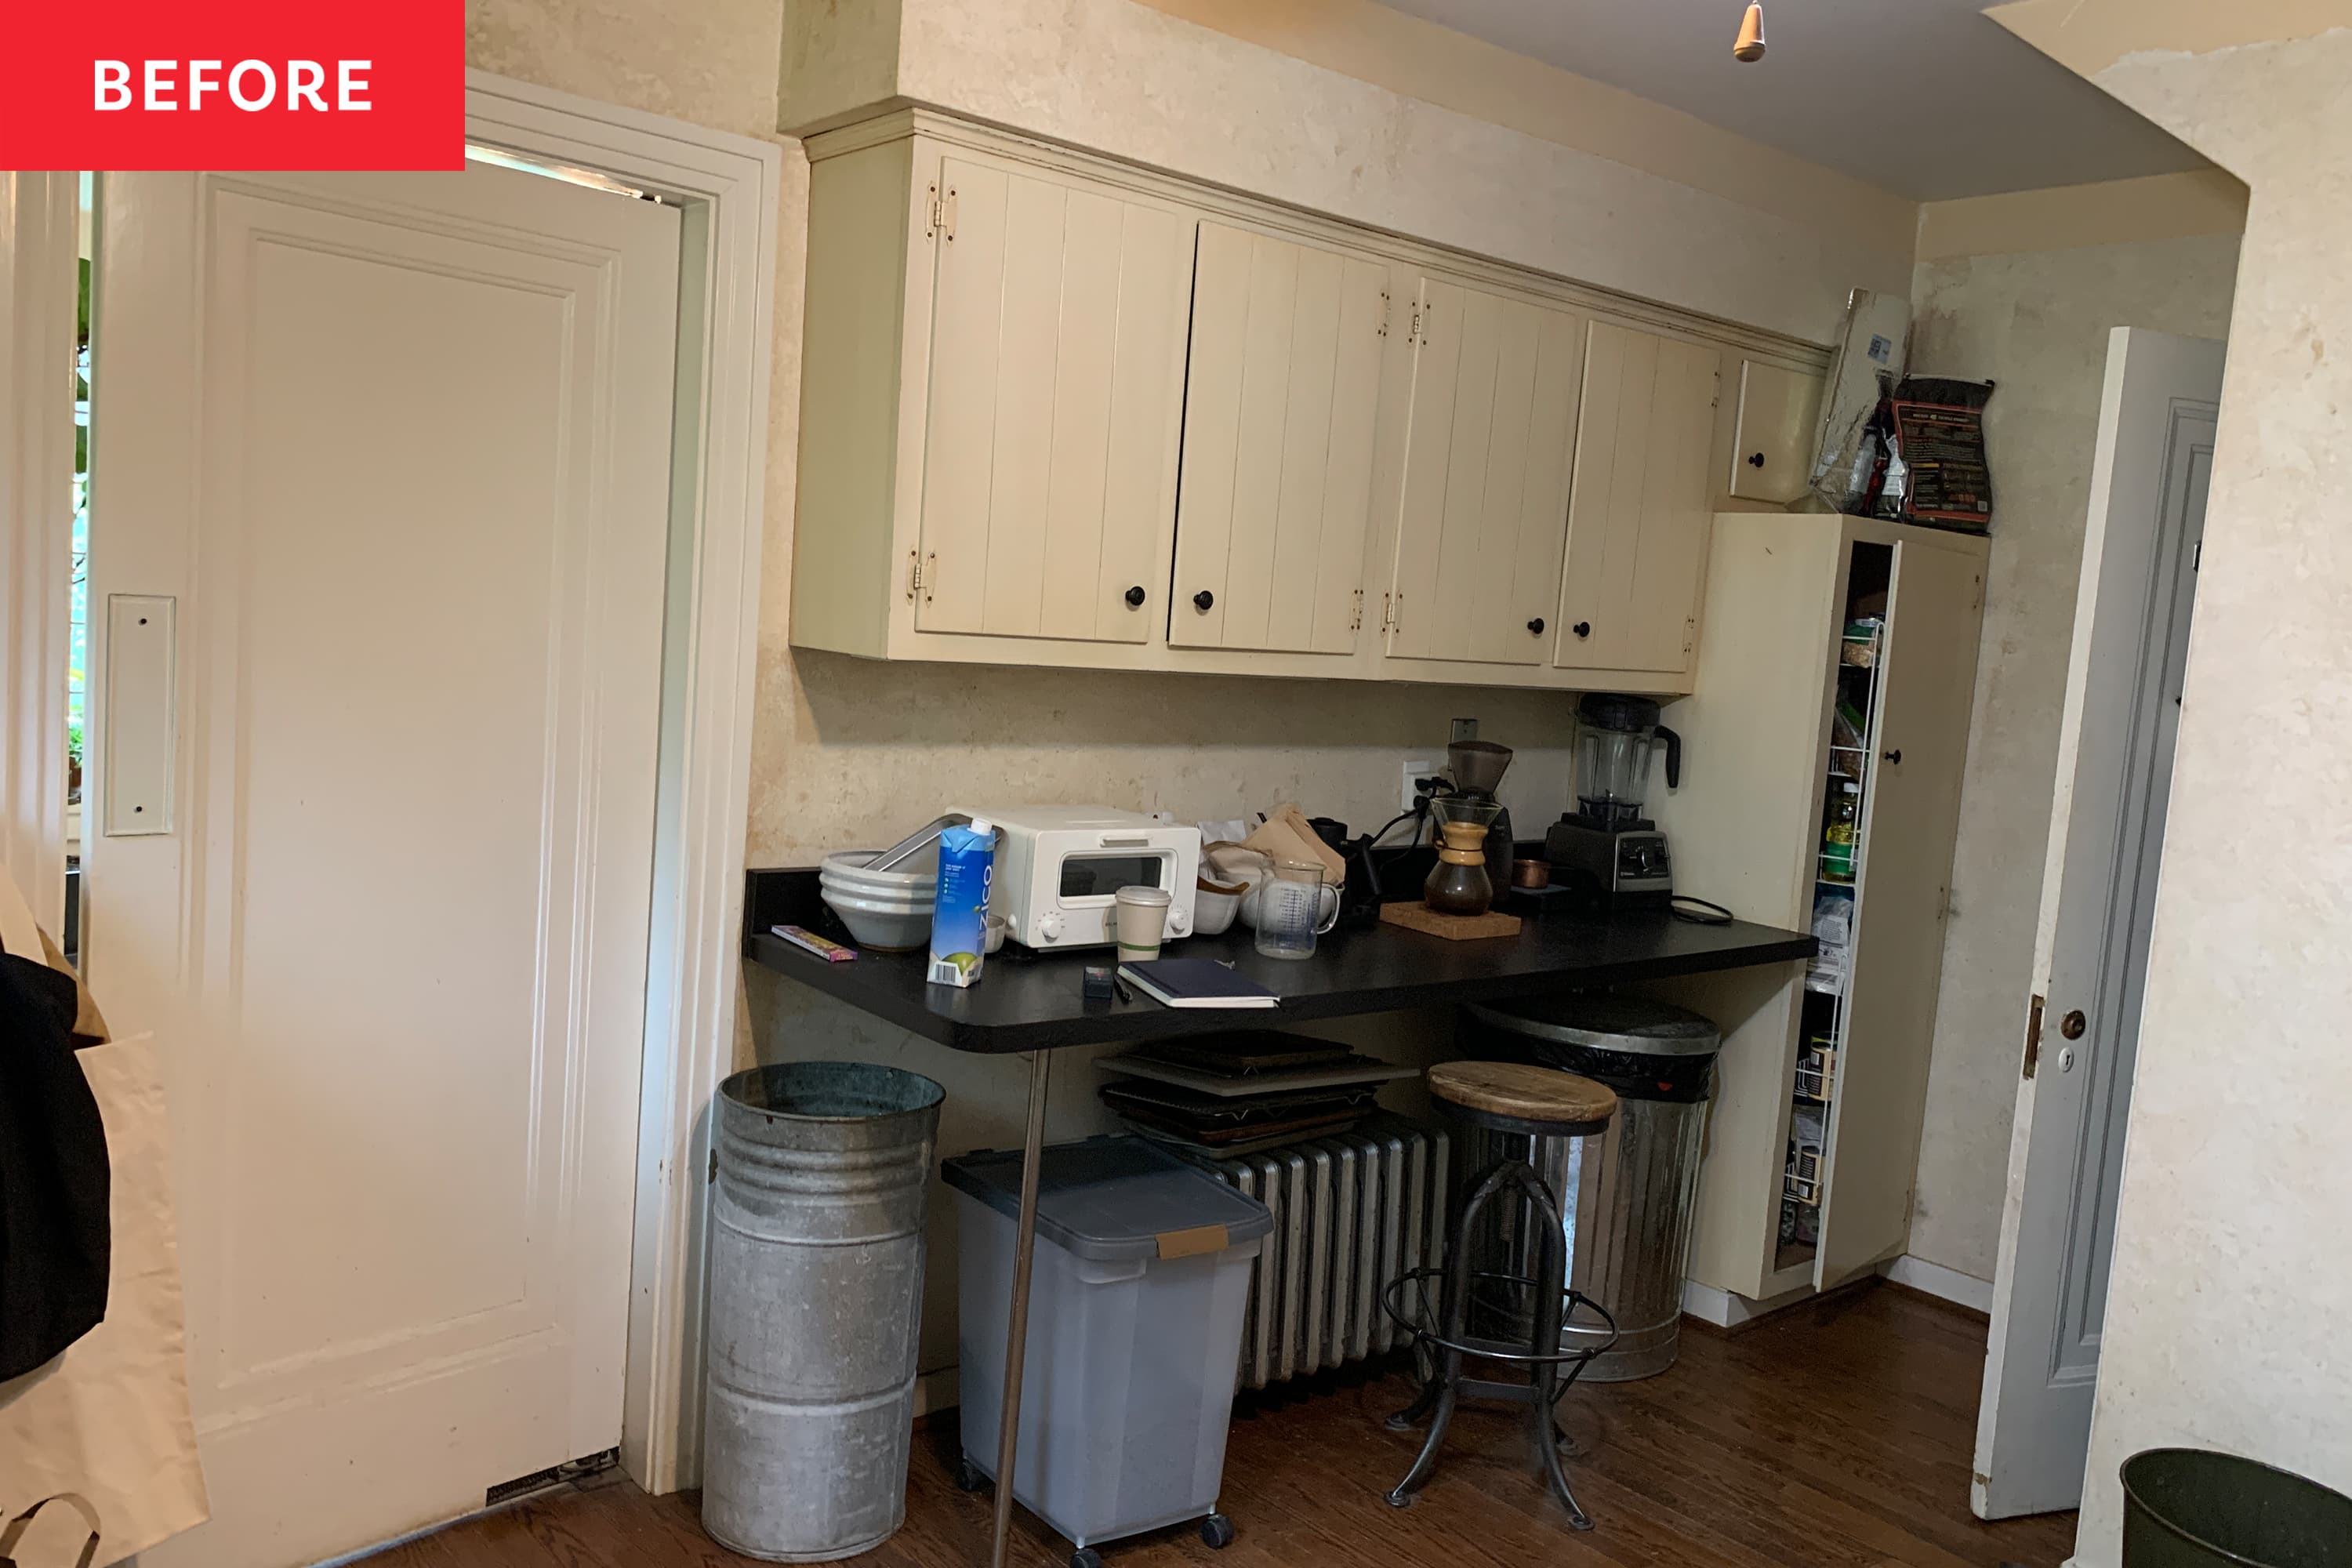 https://cdn.apartmenttherapy.info/image/upload/v1680111674/at/style/2023-04/studio-lithe-kitchen/birnbaum-studio-lithe-before-tagged-0530.jpg